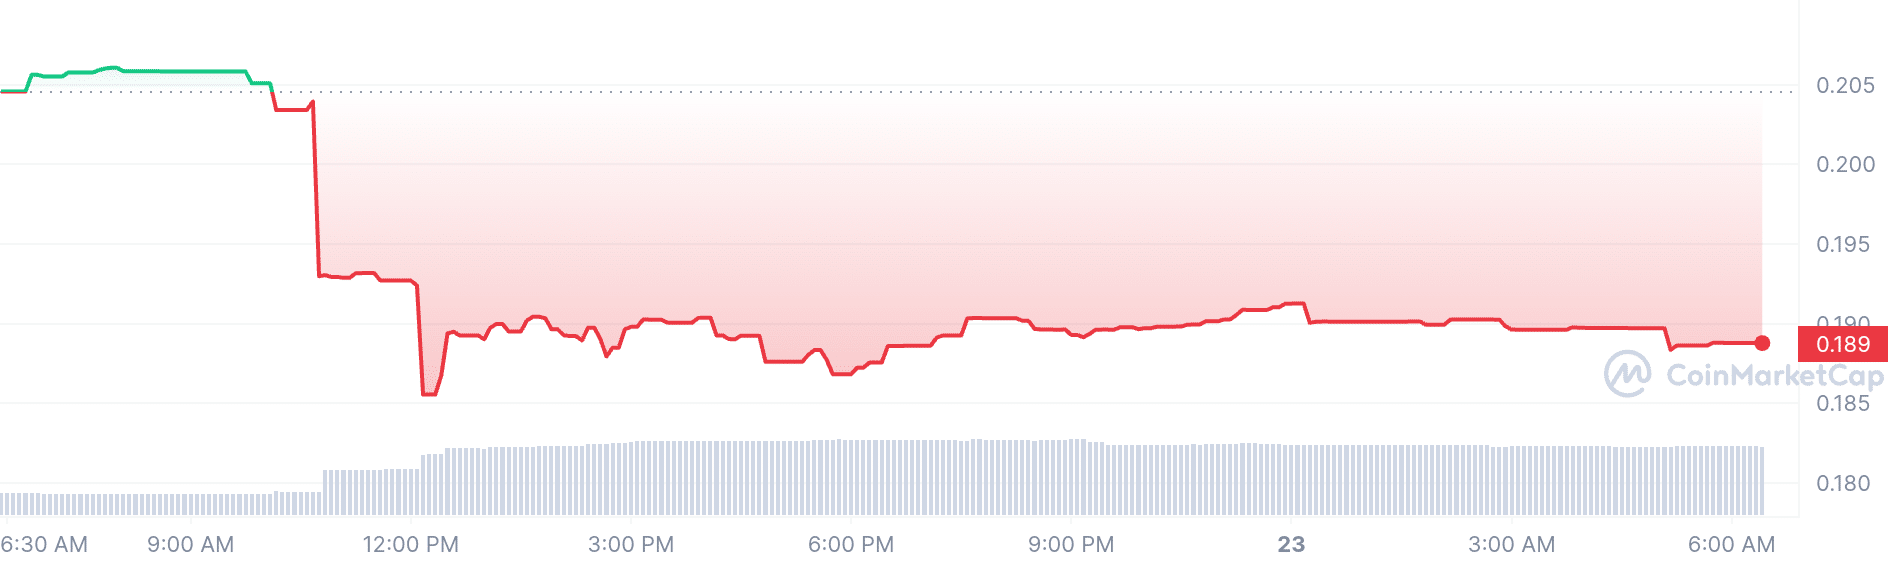 Puff the Dragon price chart